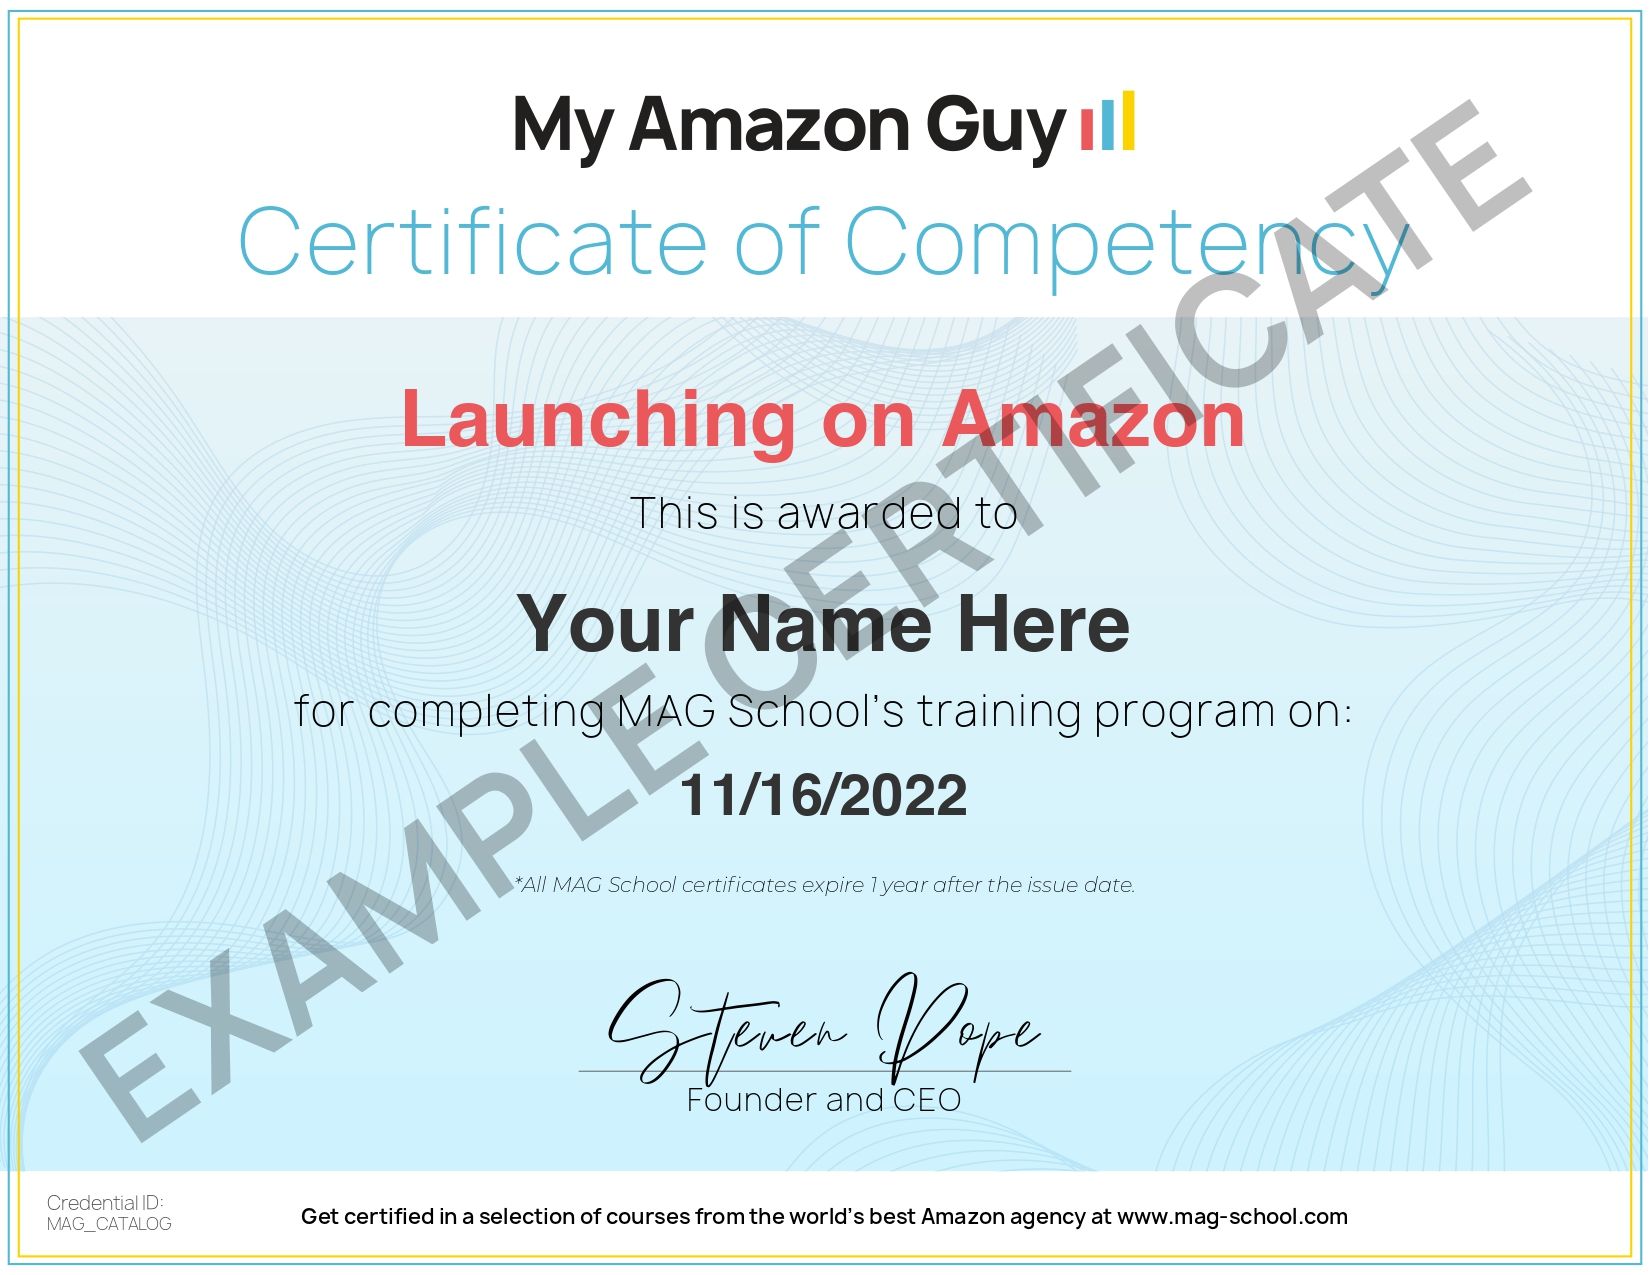 Launching on Amazon Course